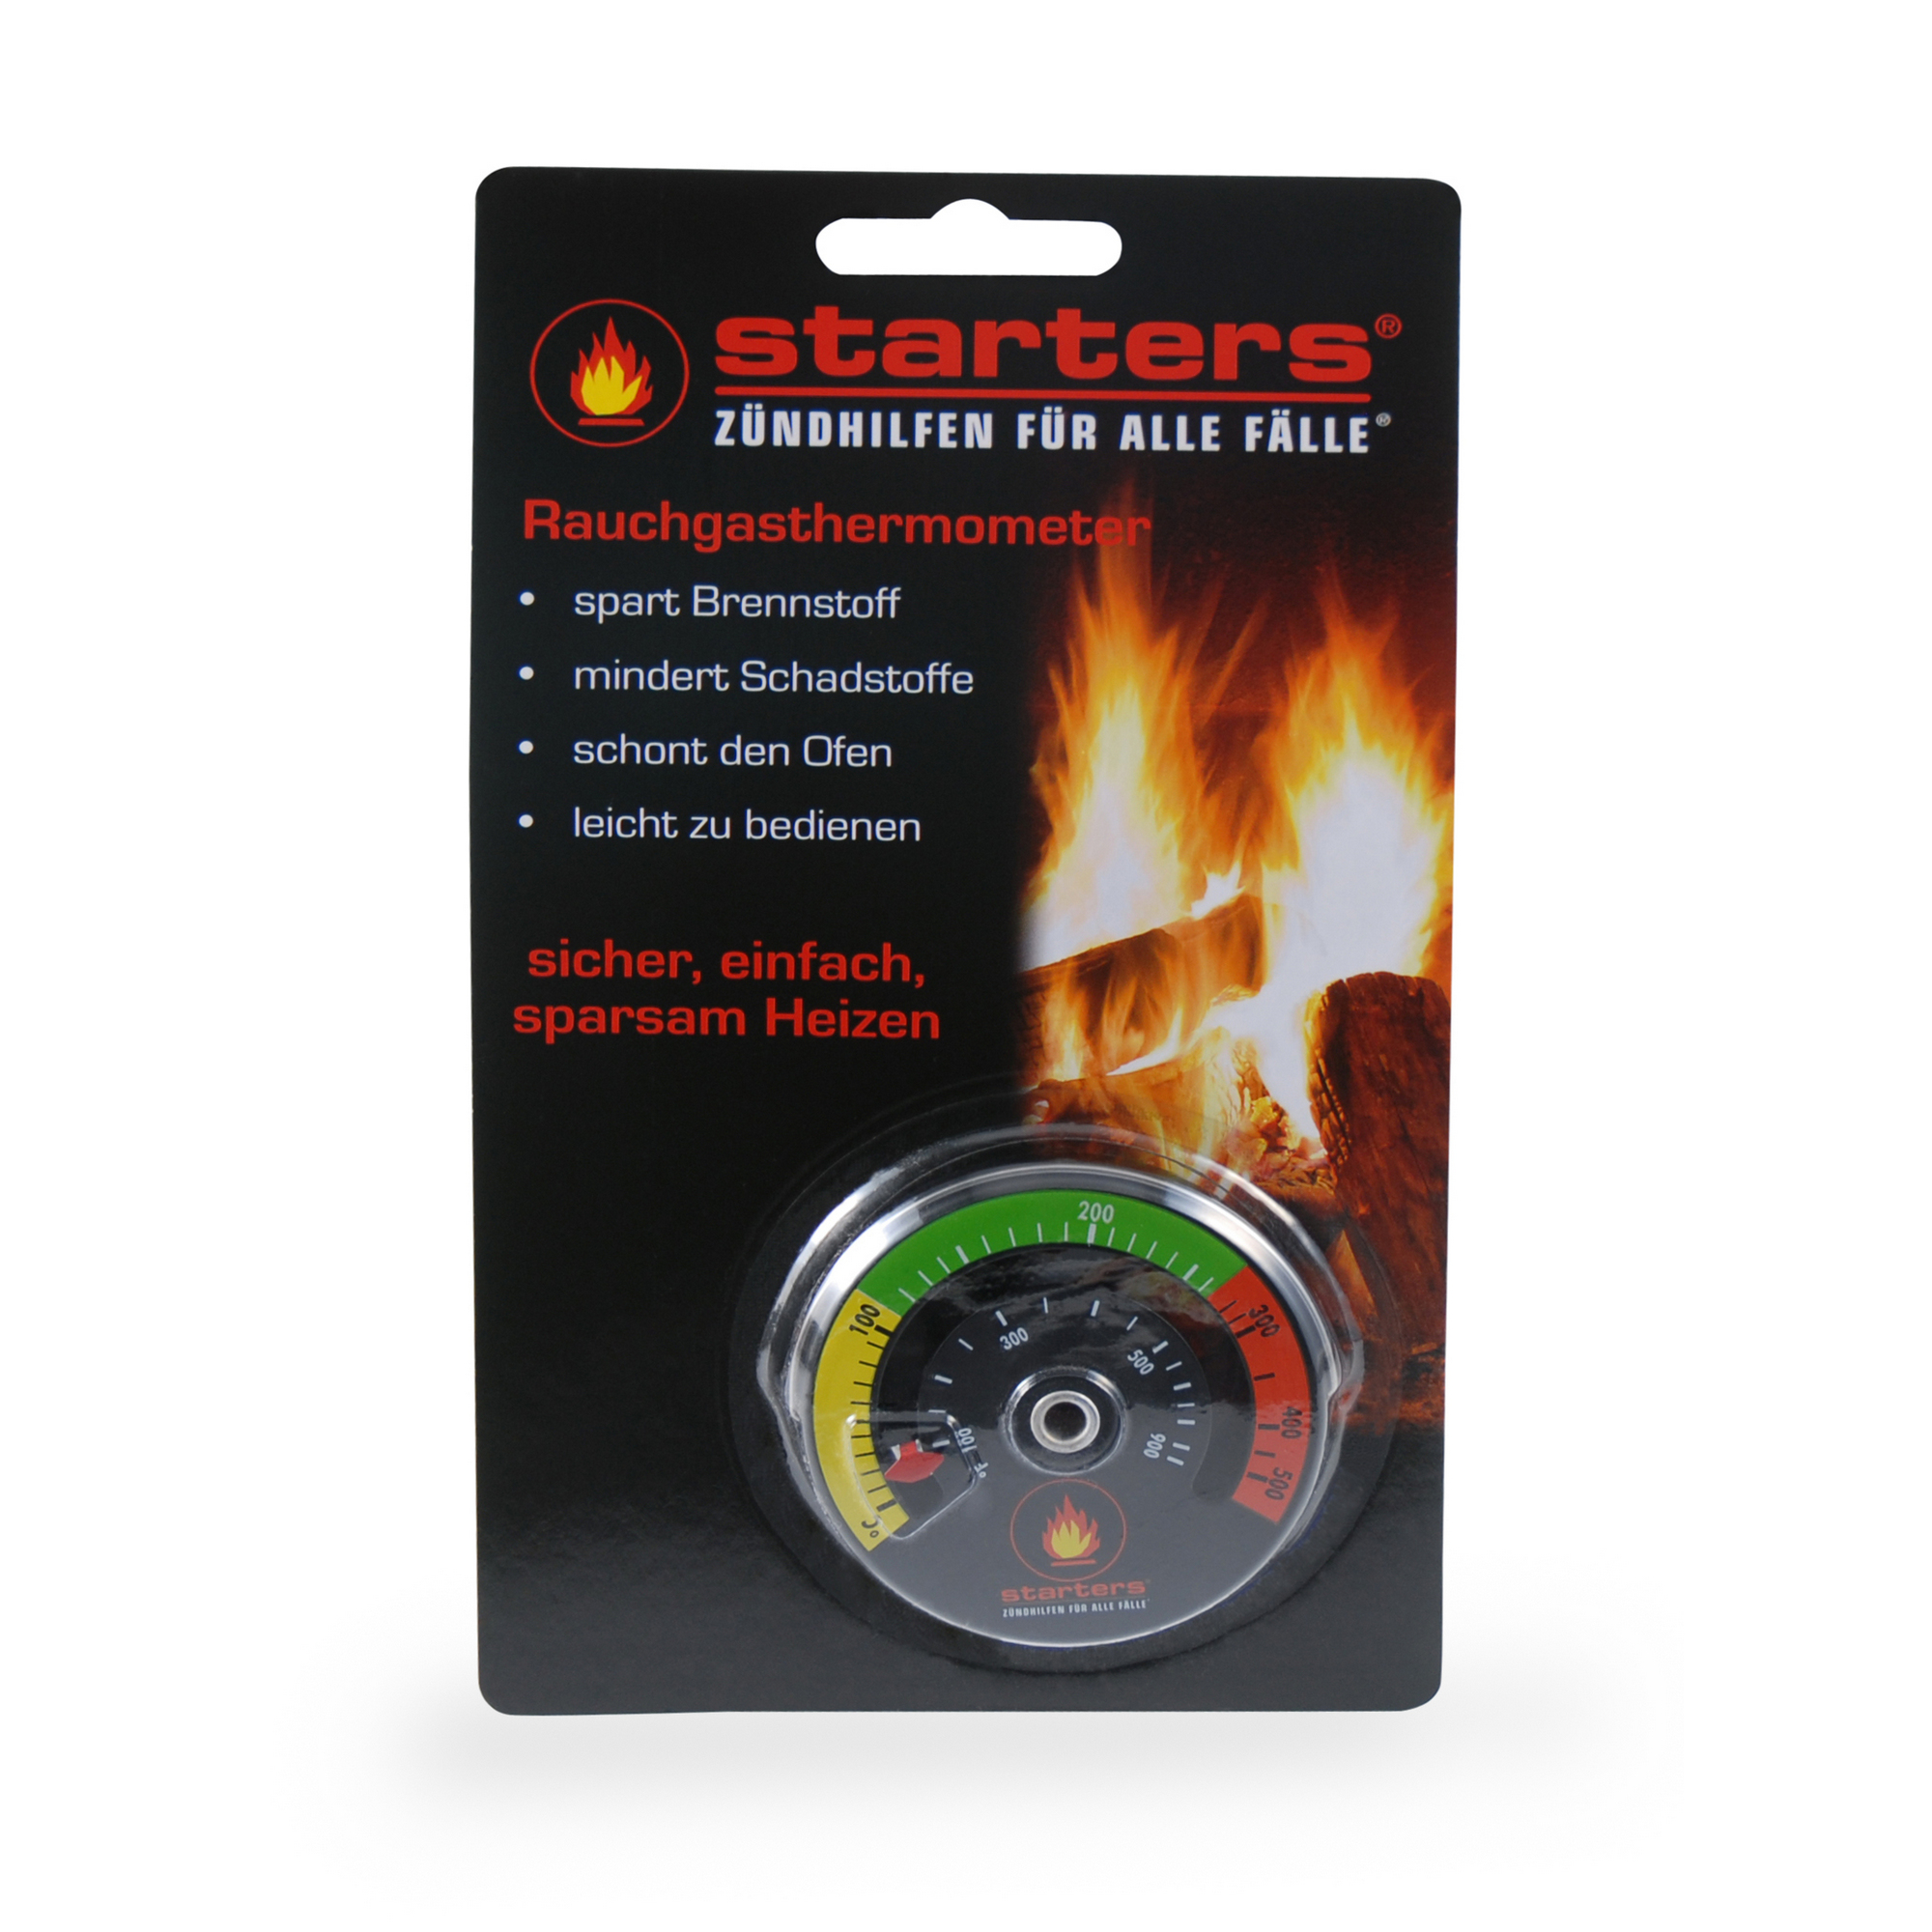 Starters Rauchgasthermometer mit Magnetbefestigung + product picture